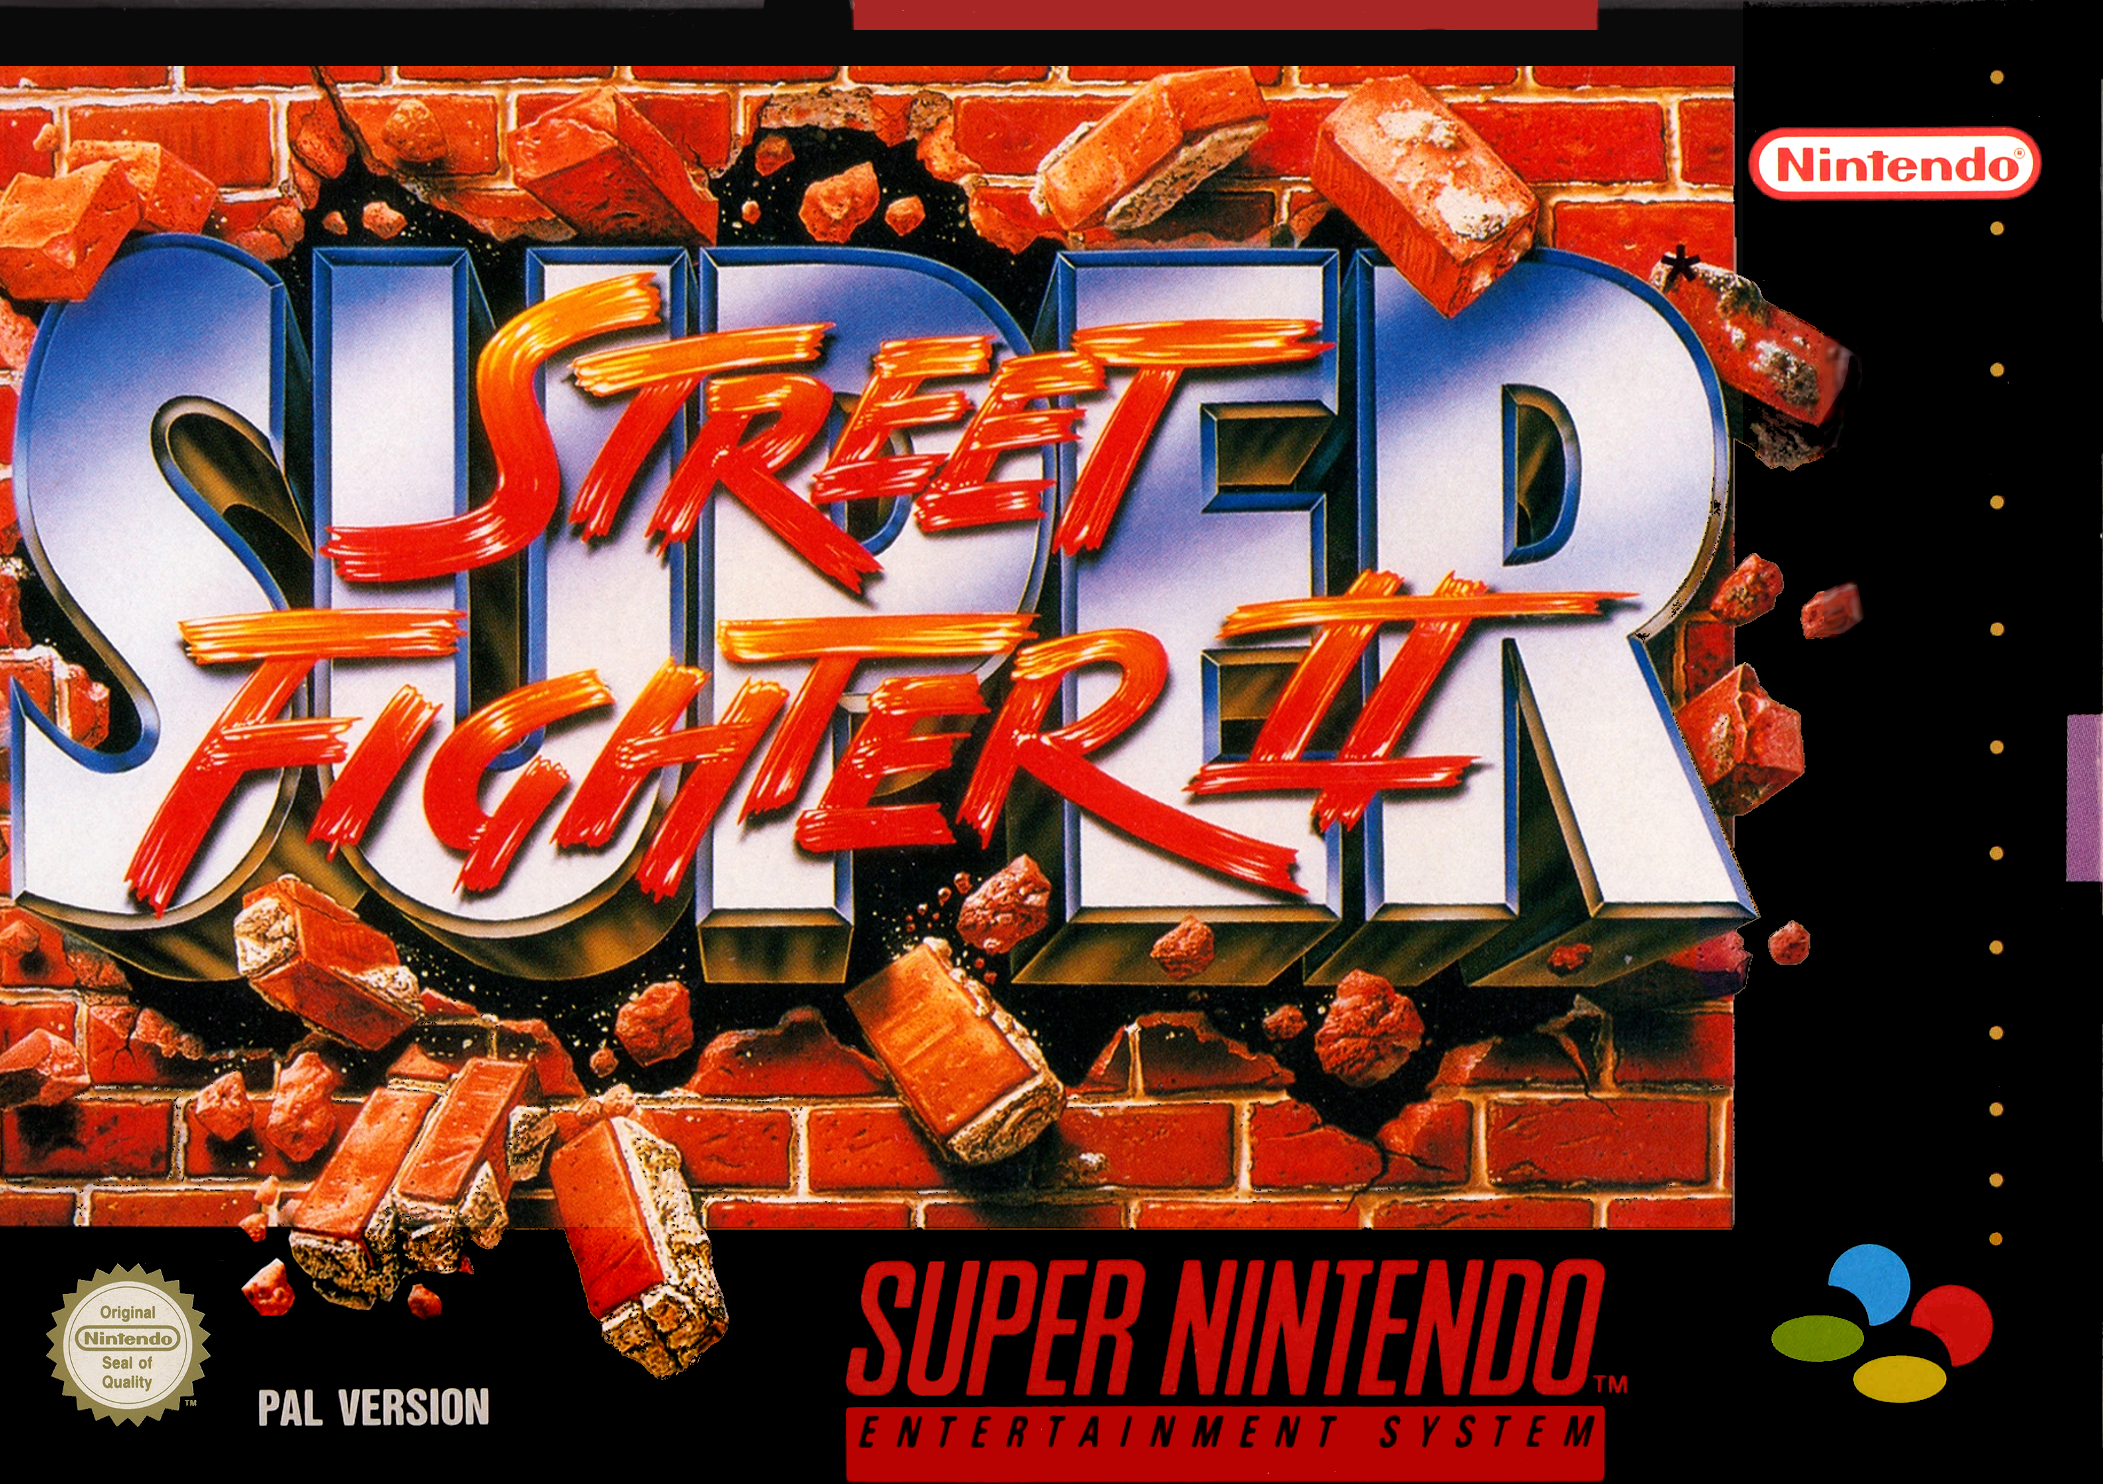 Super second. Super Street Fighter 2 Snes. Street Fighter II Turbo Snes. Street Fighter II super Famicom. Super Street Fighter 2 the New Challengers.